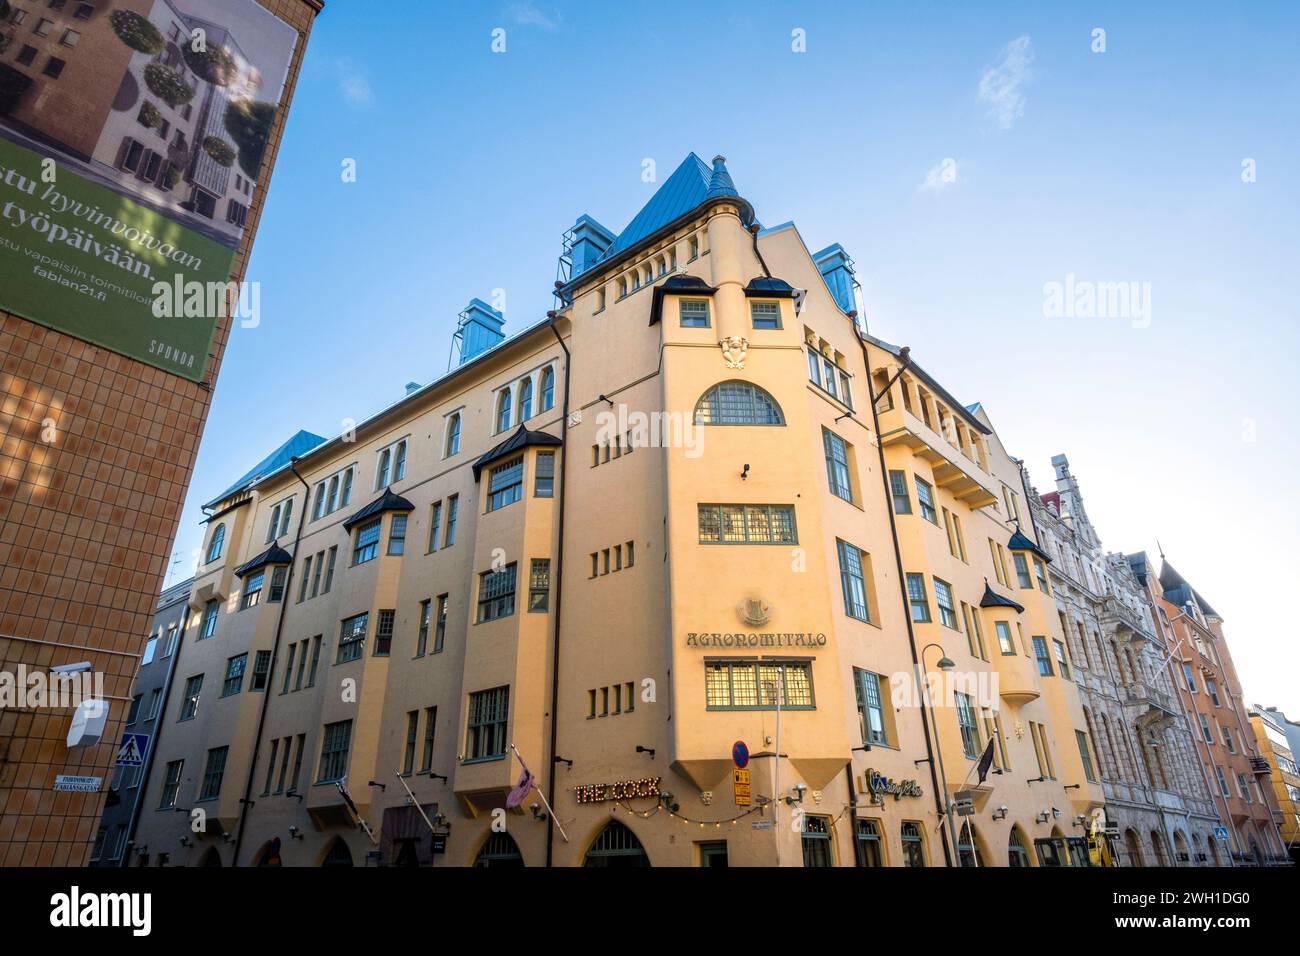 Facade of an art nouveau building in central Helsinki, Finland Stock Photo